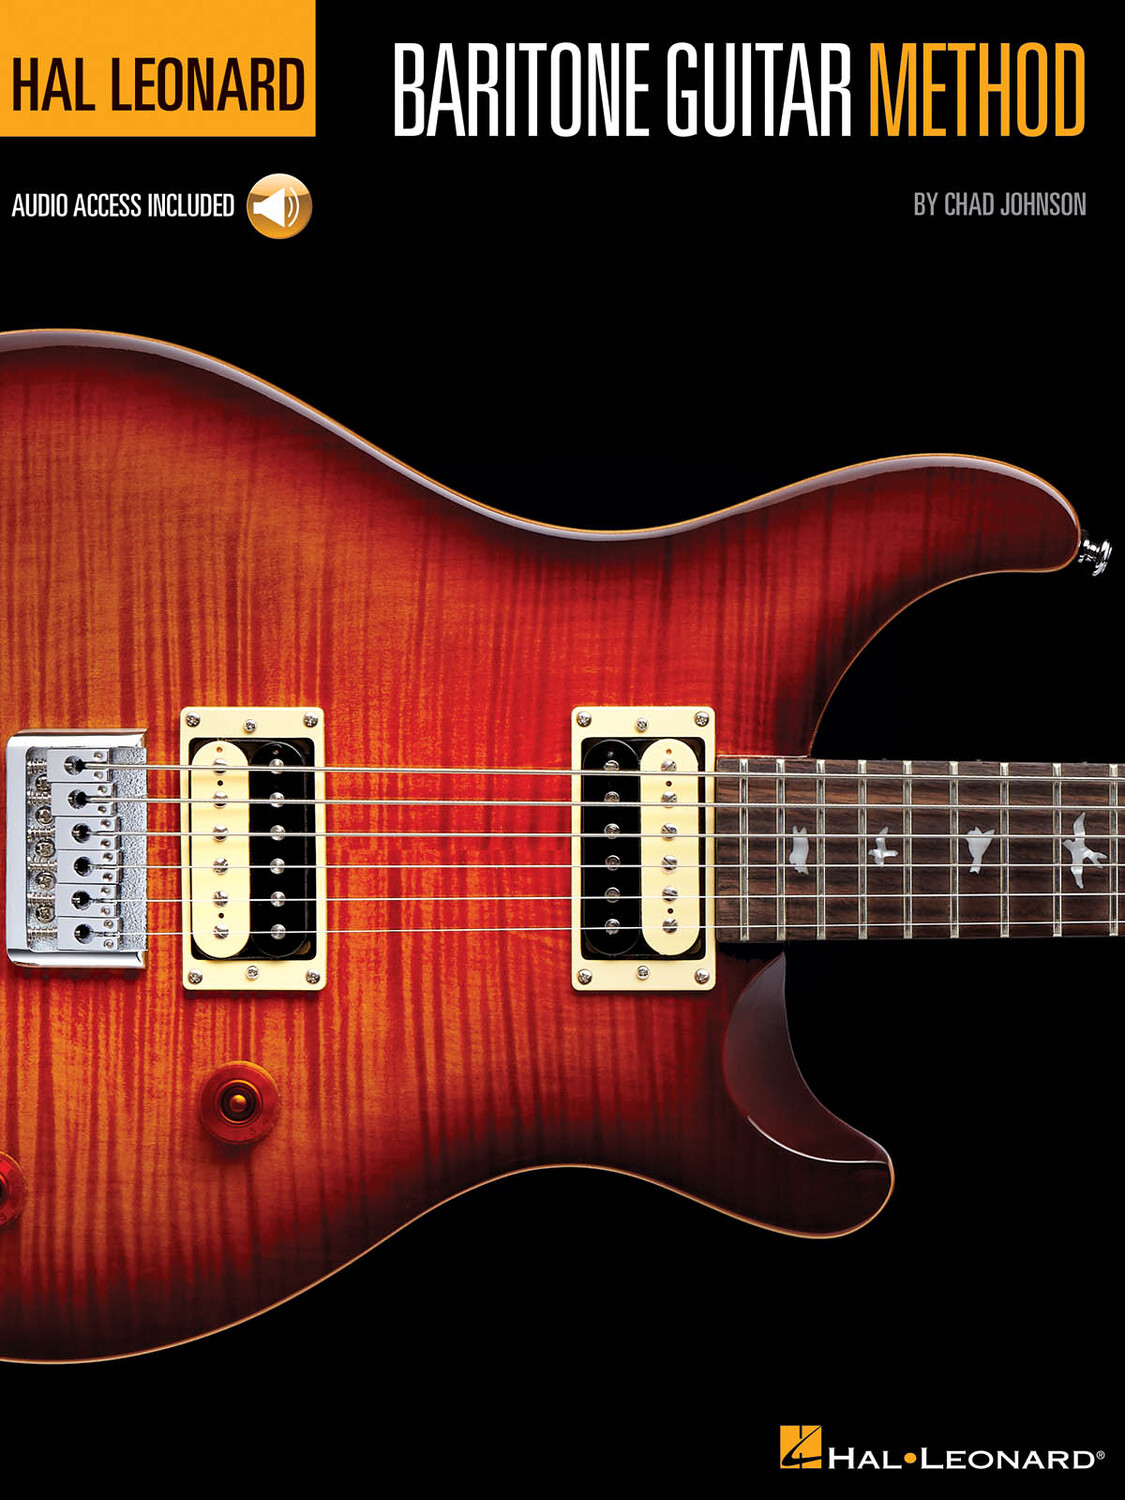 Cover: 888680704377 | Hal Leonard Baritone Guitar Method | Chad Johnson | 2018 | Hal Leonard